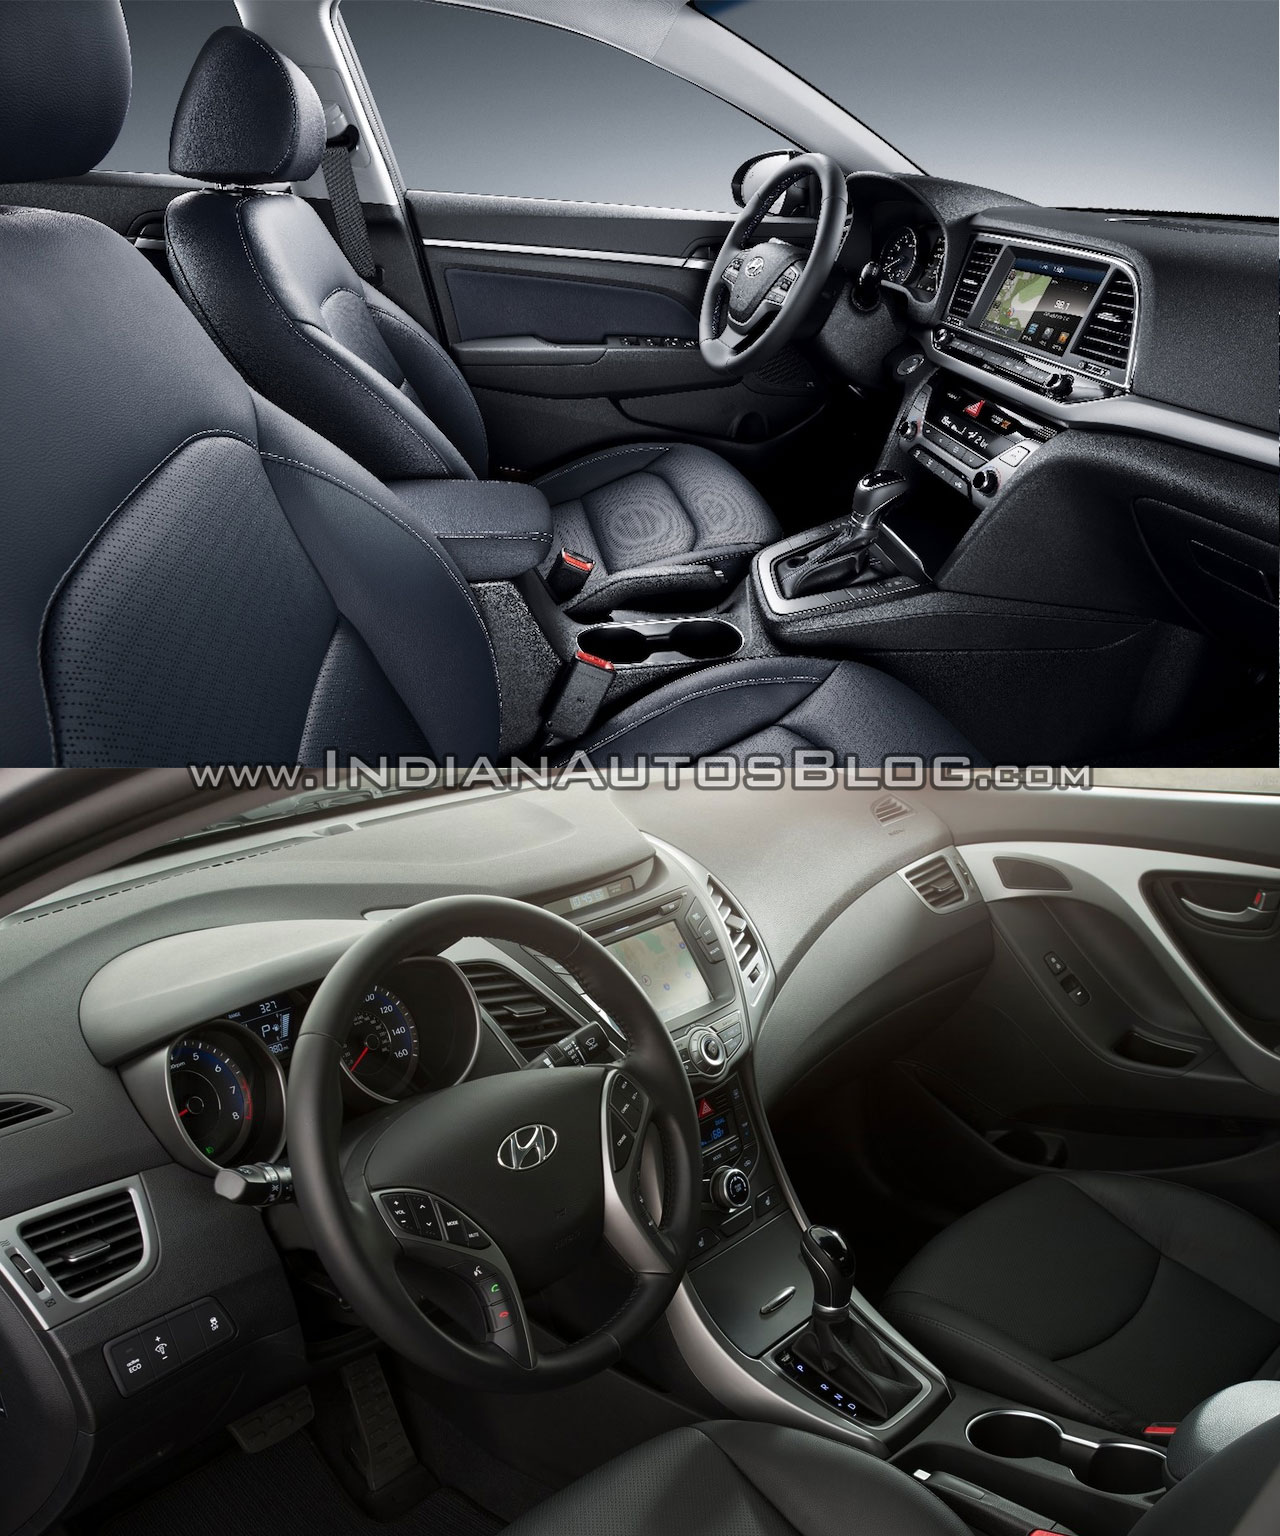 2016 Hyundai Elantra Vs Current Model Old Vs New